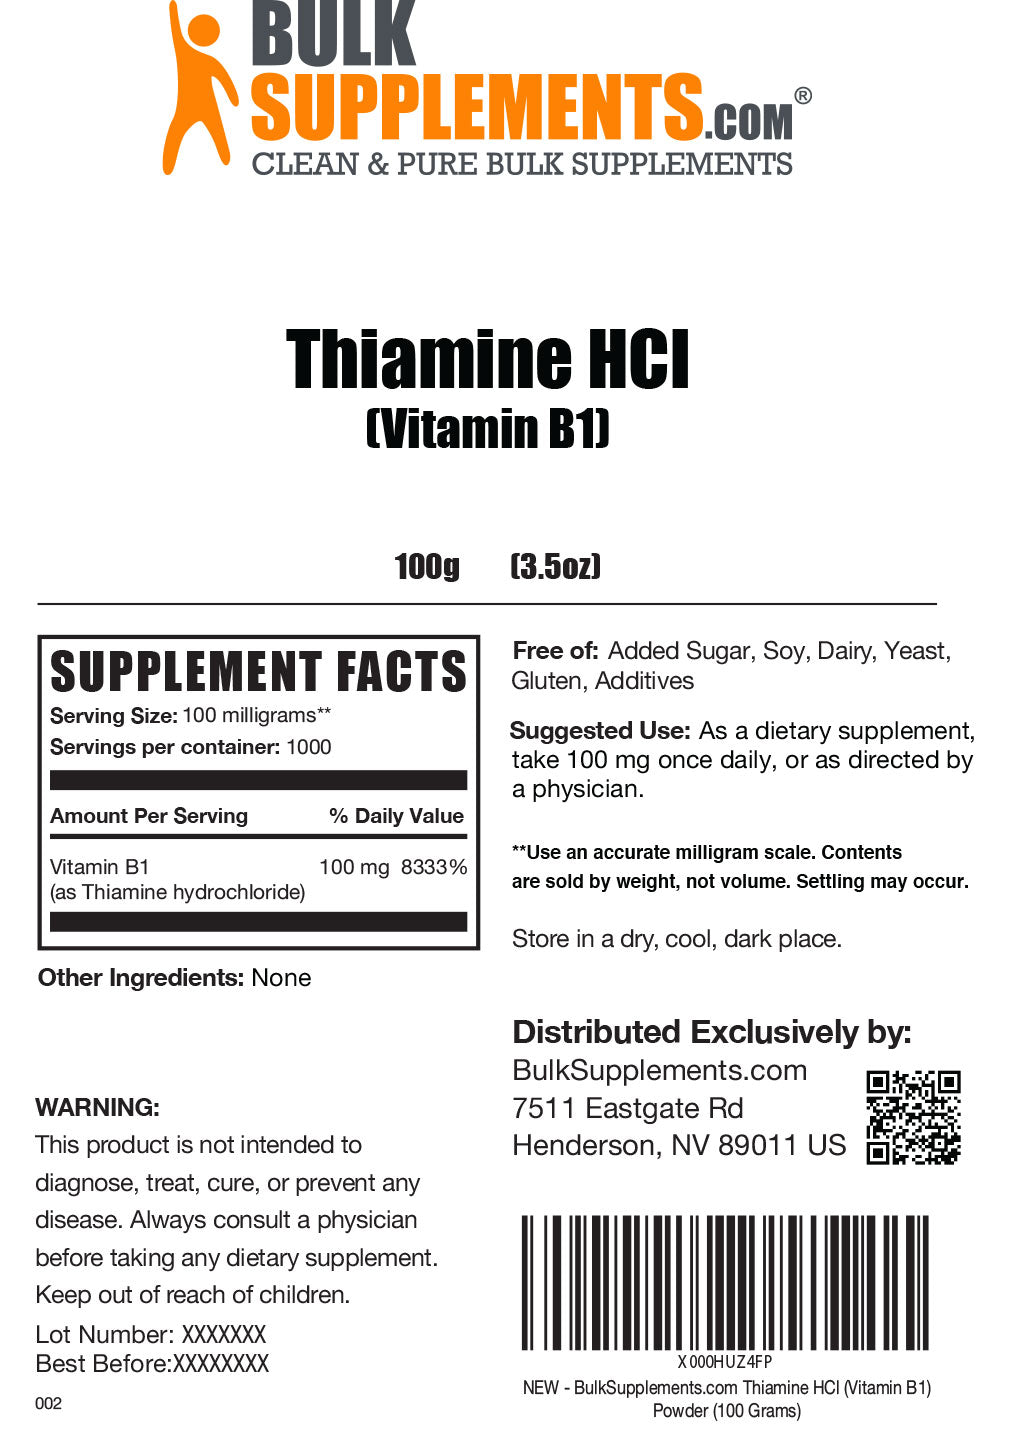 Thiamine HCl Label 100g